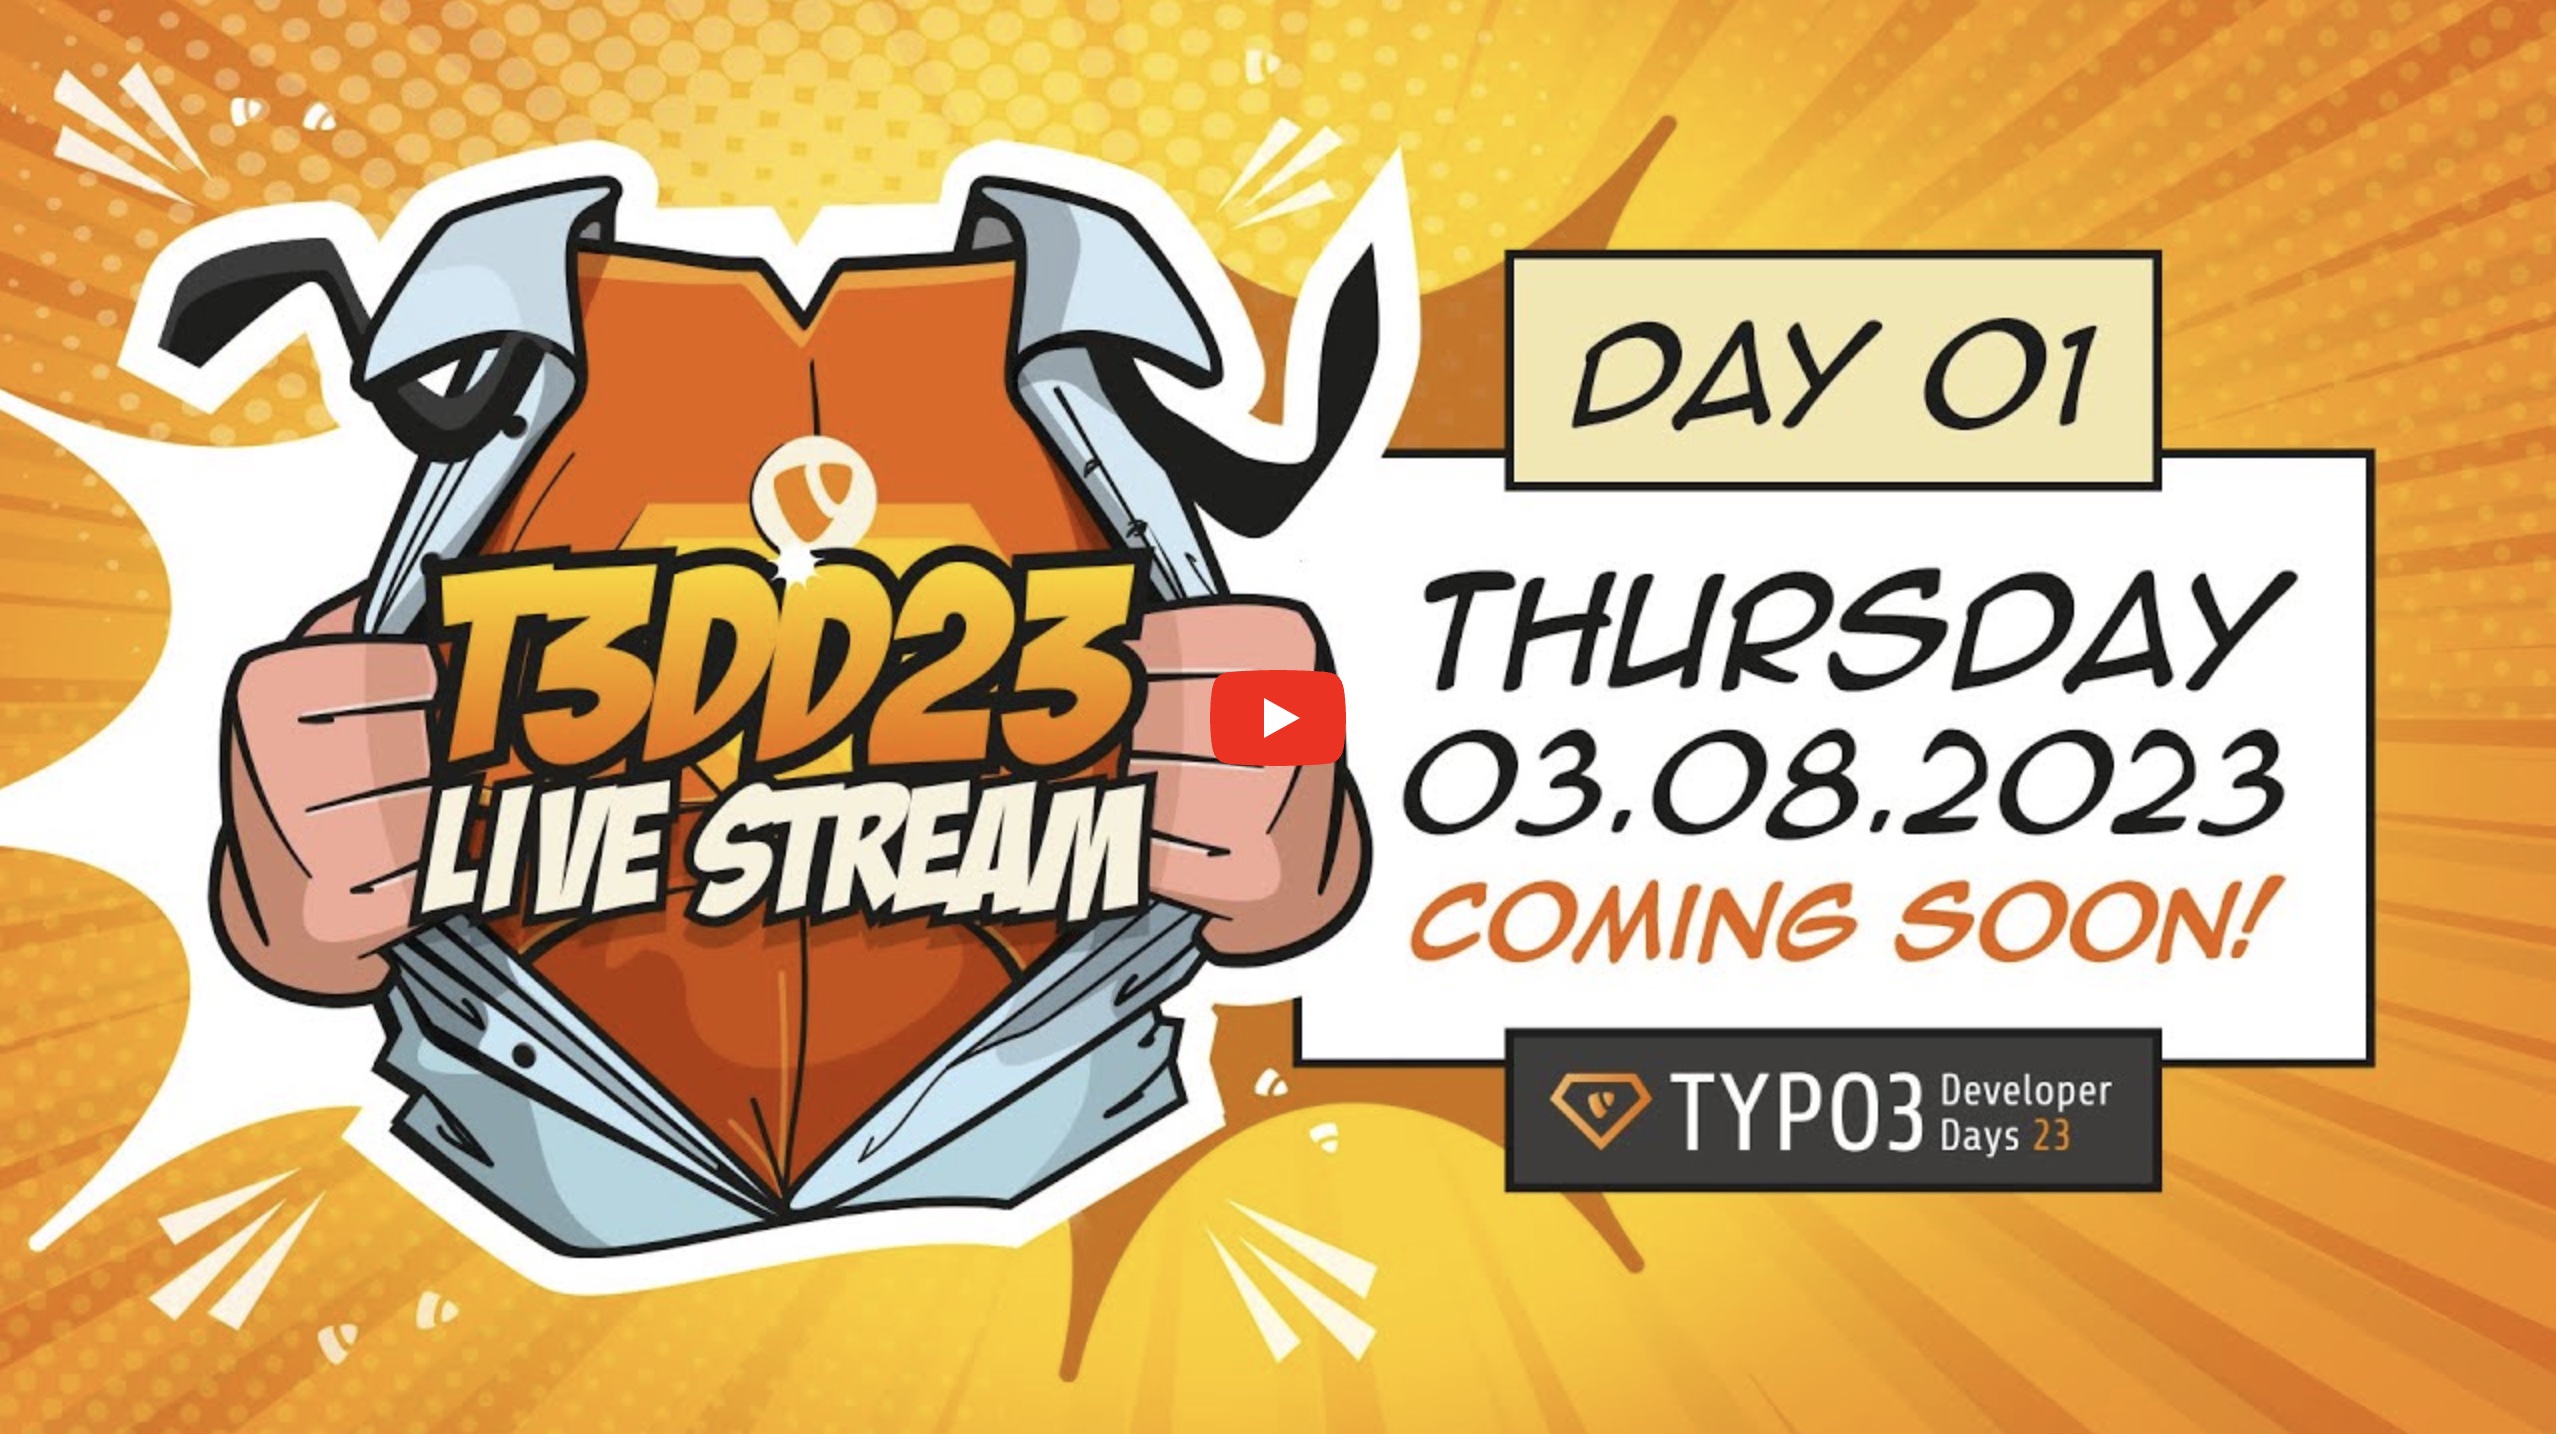 TYPO3 Developer Days Live Stream Poster Image